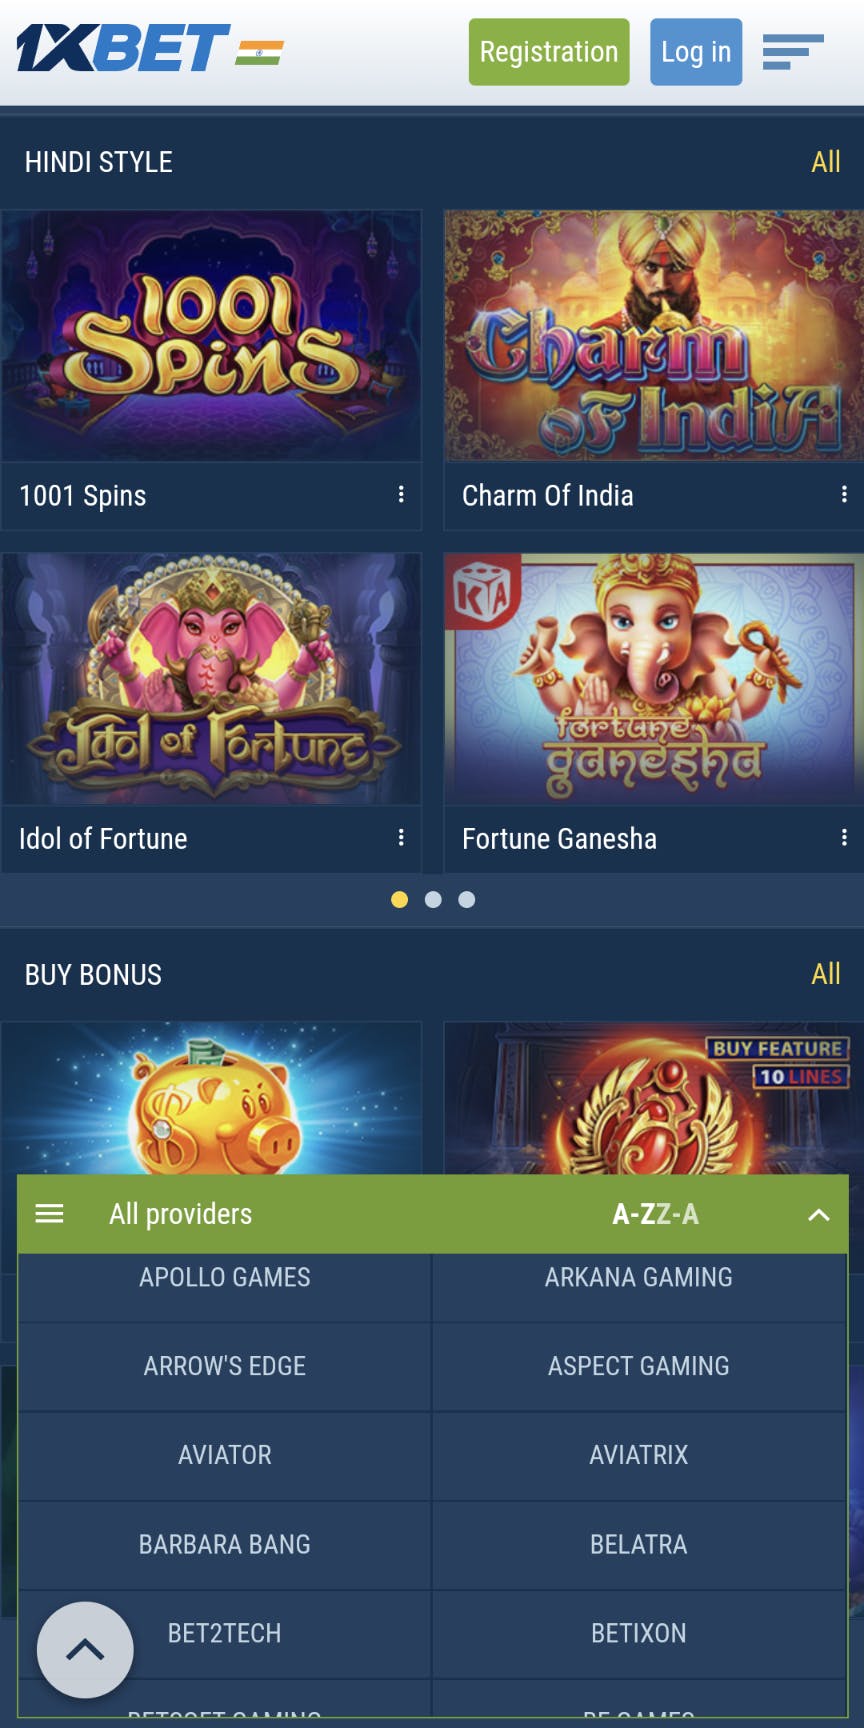 1xBet app Hindi style casino games.